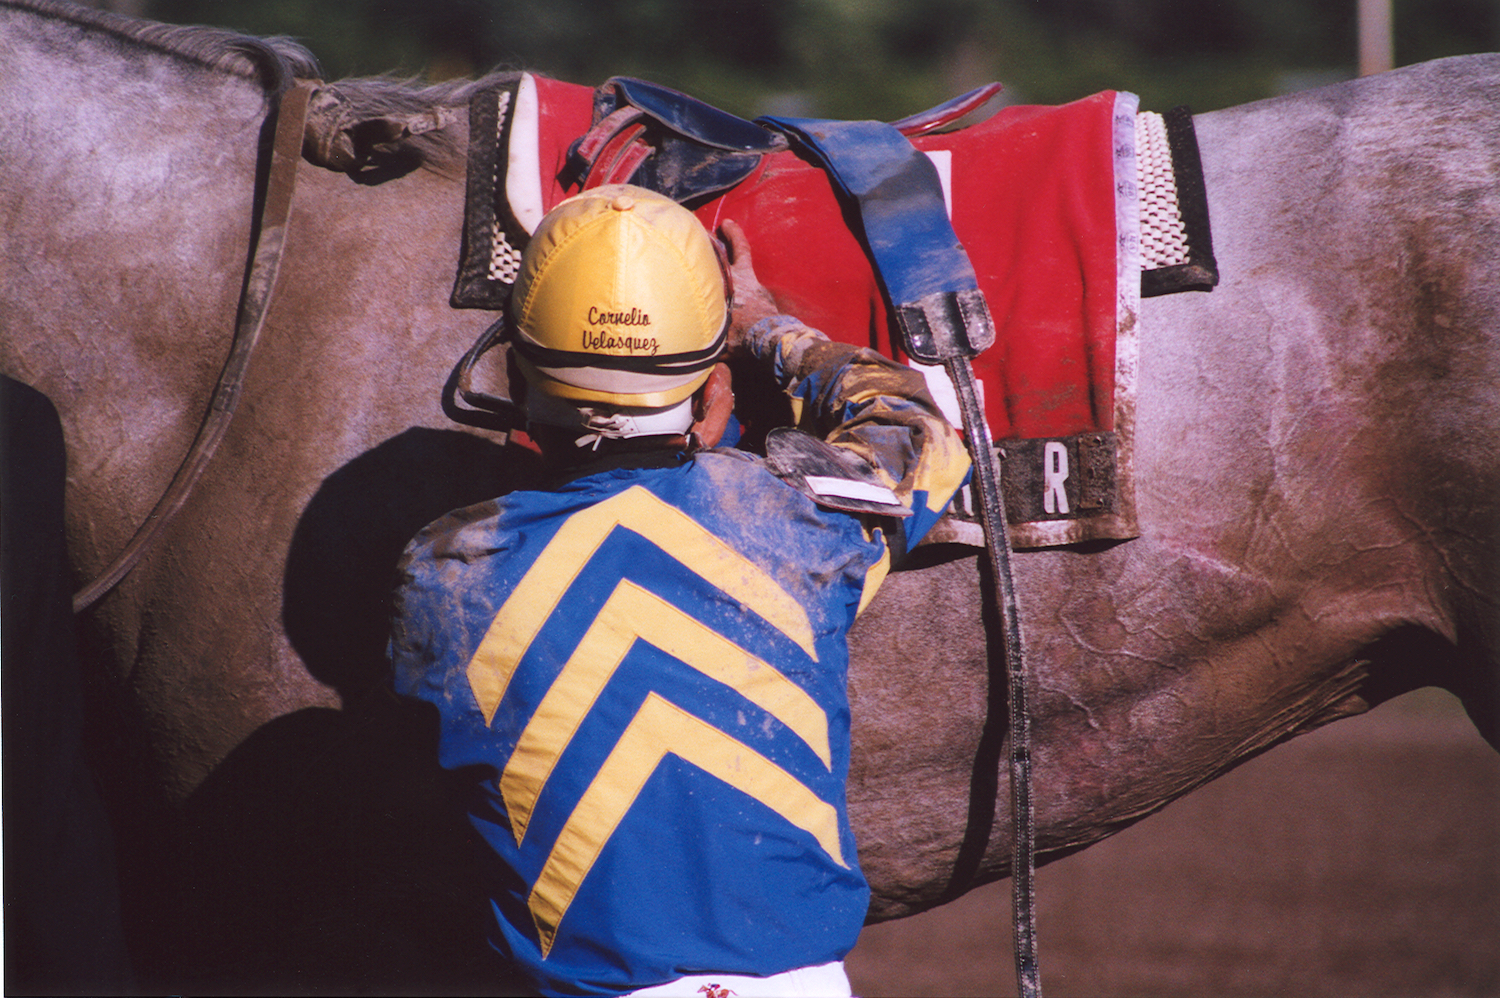 "Dismount" (August 21, 2005 - Saratoga Race Course), Dennis Hogan